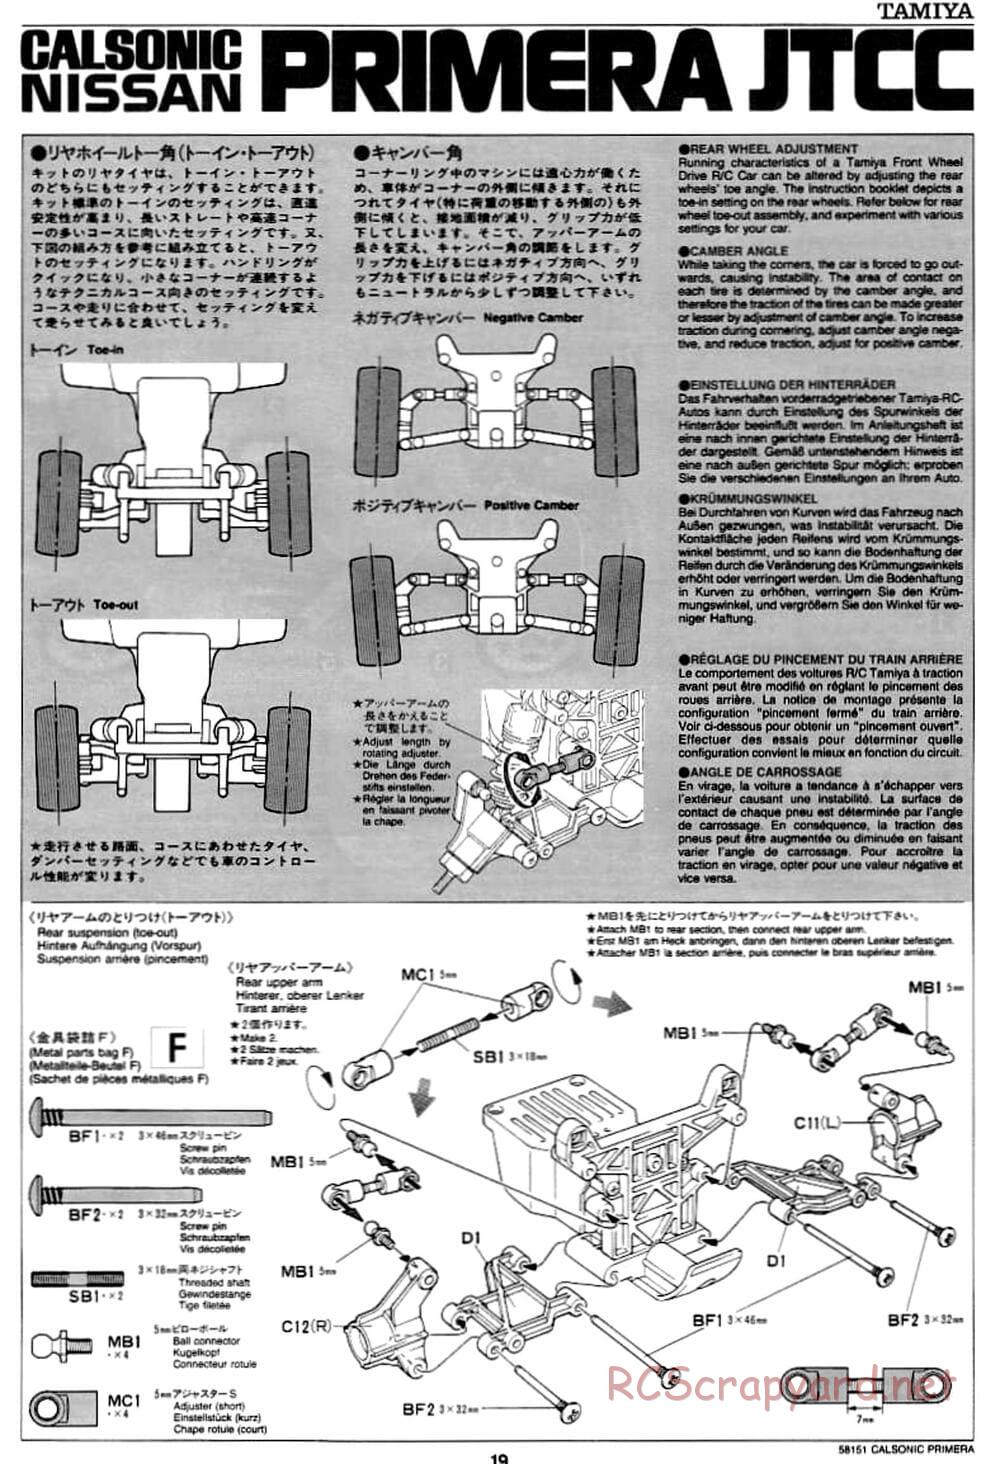 Tamiya - Calsonic Nissan Primera JTCC - FF-01 Chassis - Manual - Page 19